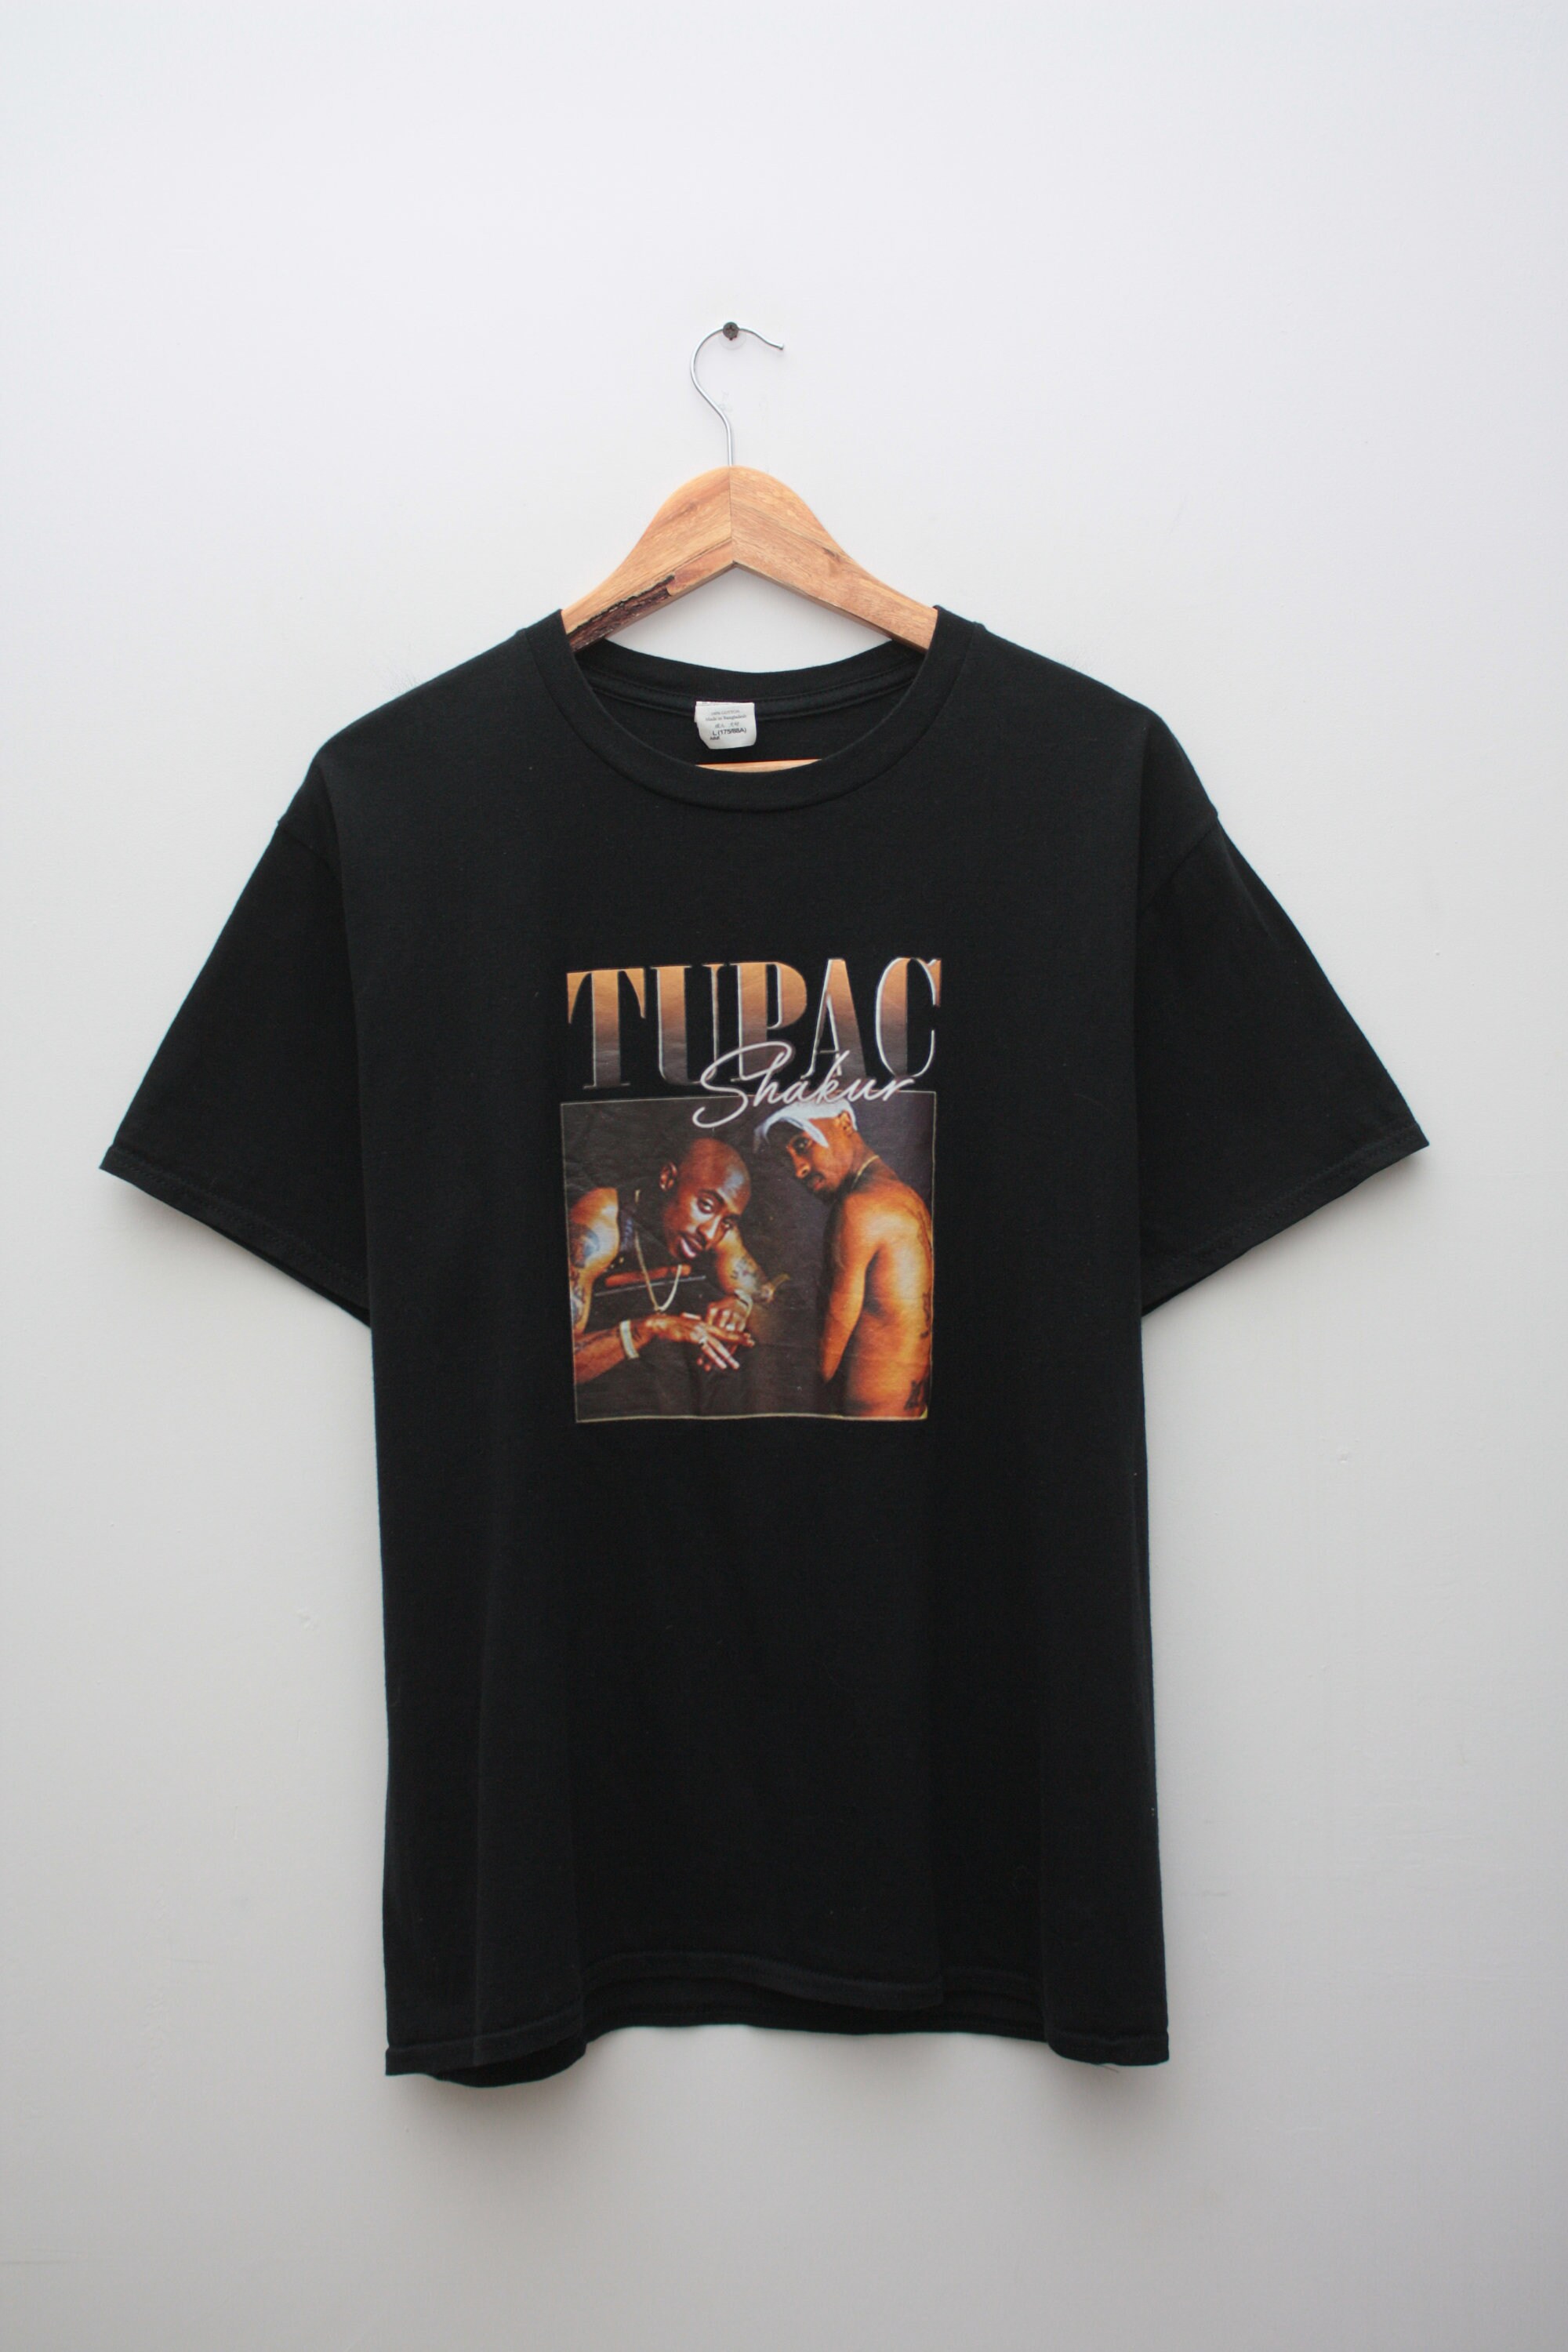 Tupac Black Black Men - Etsy Israel